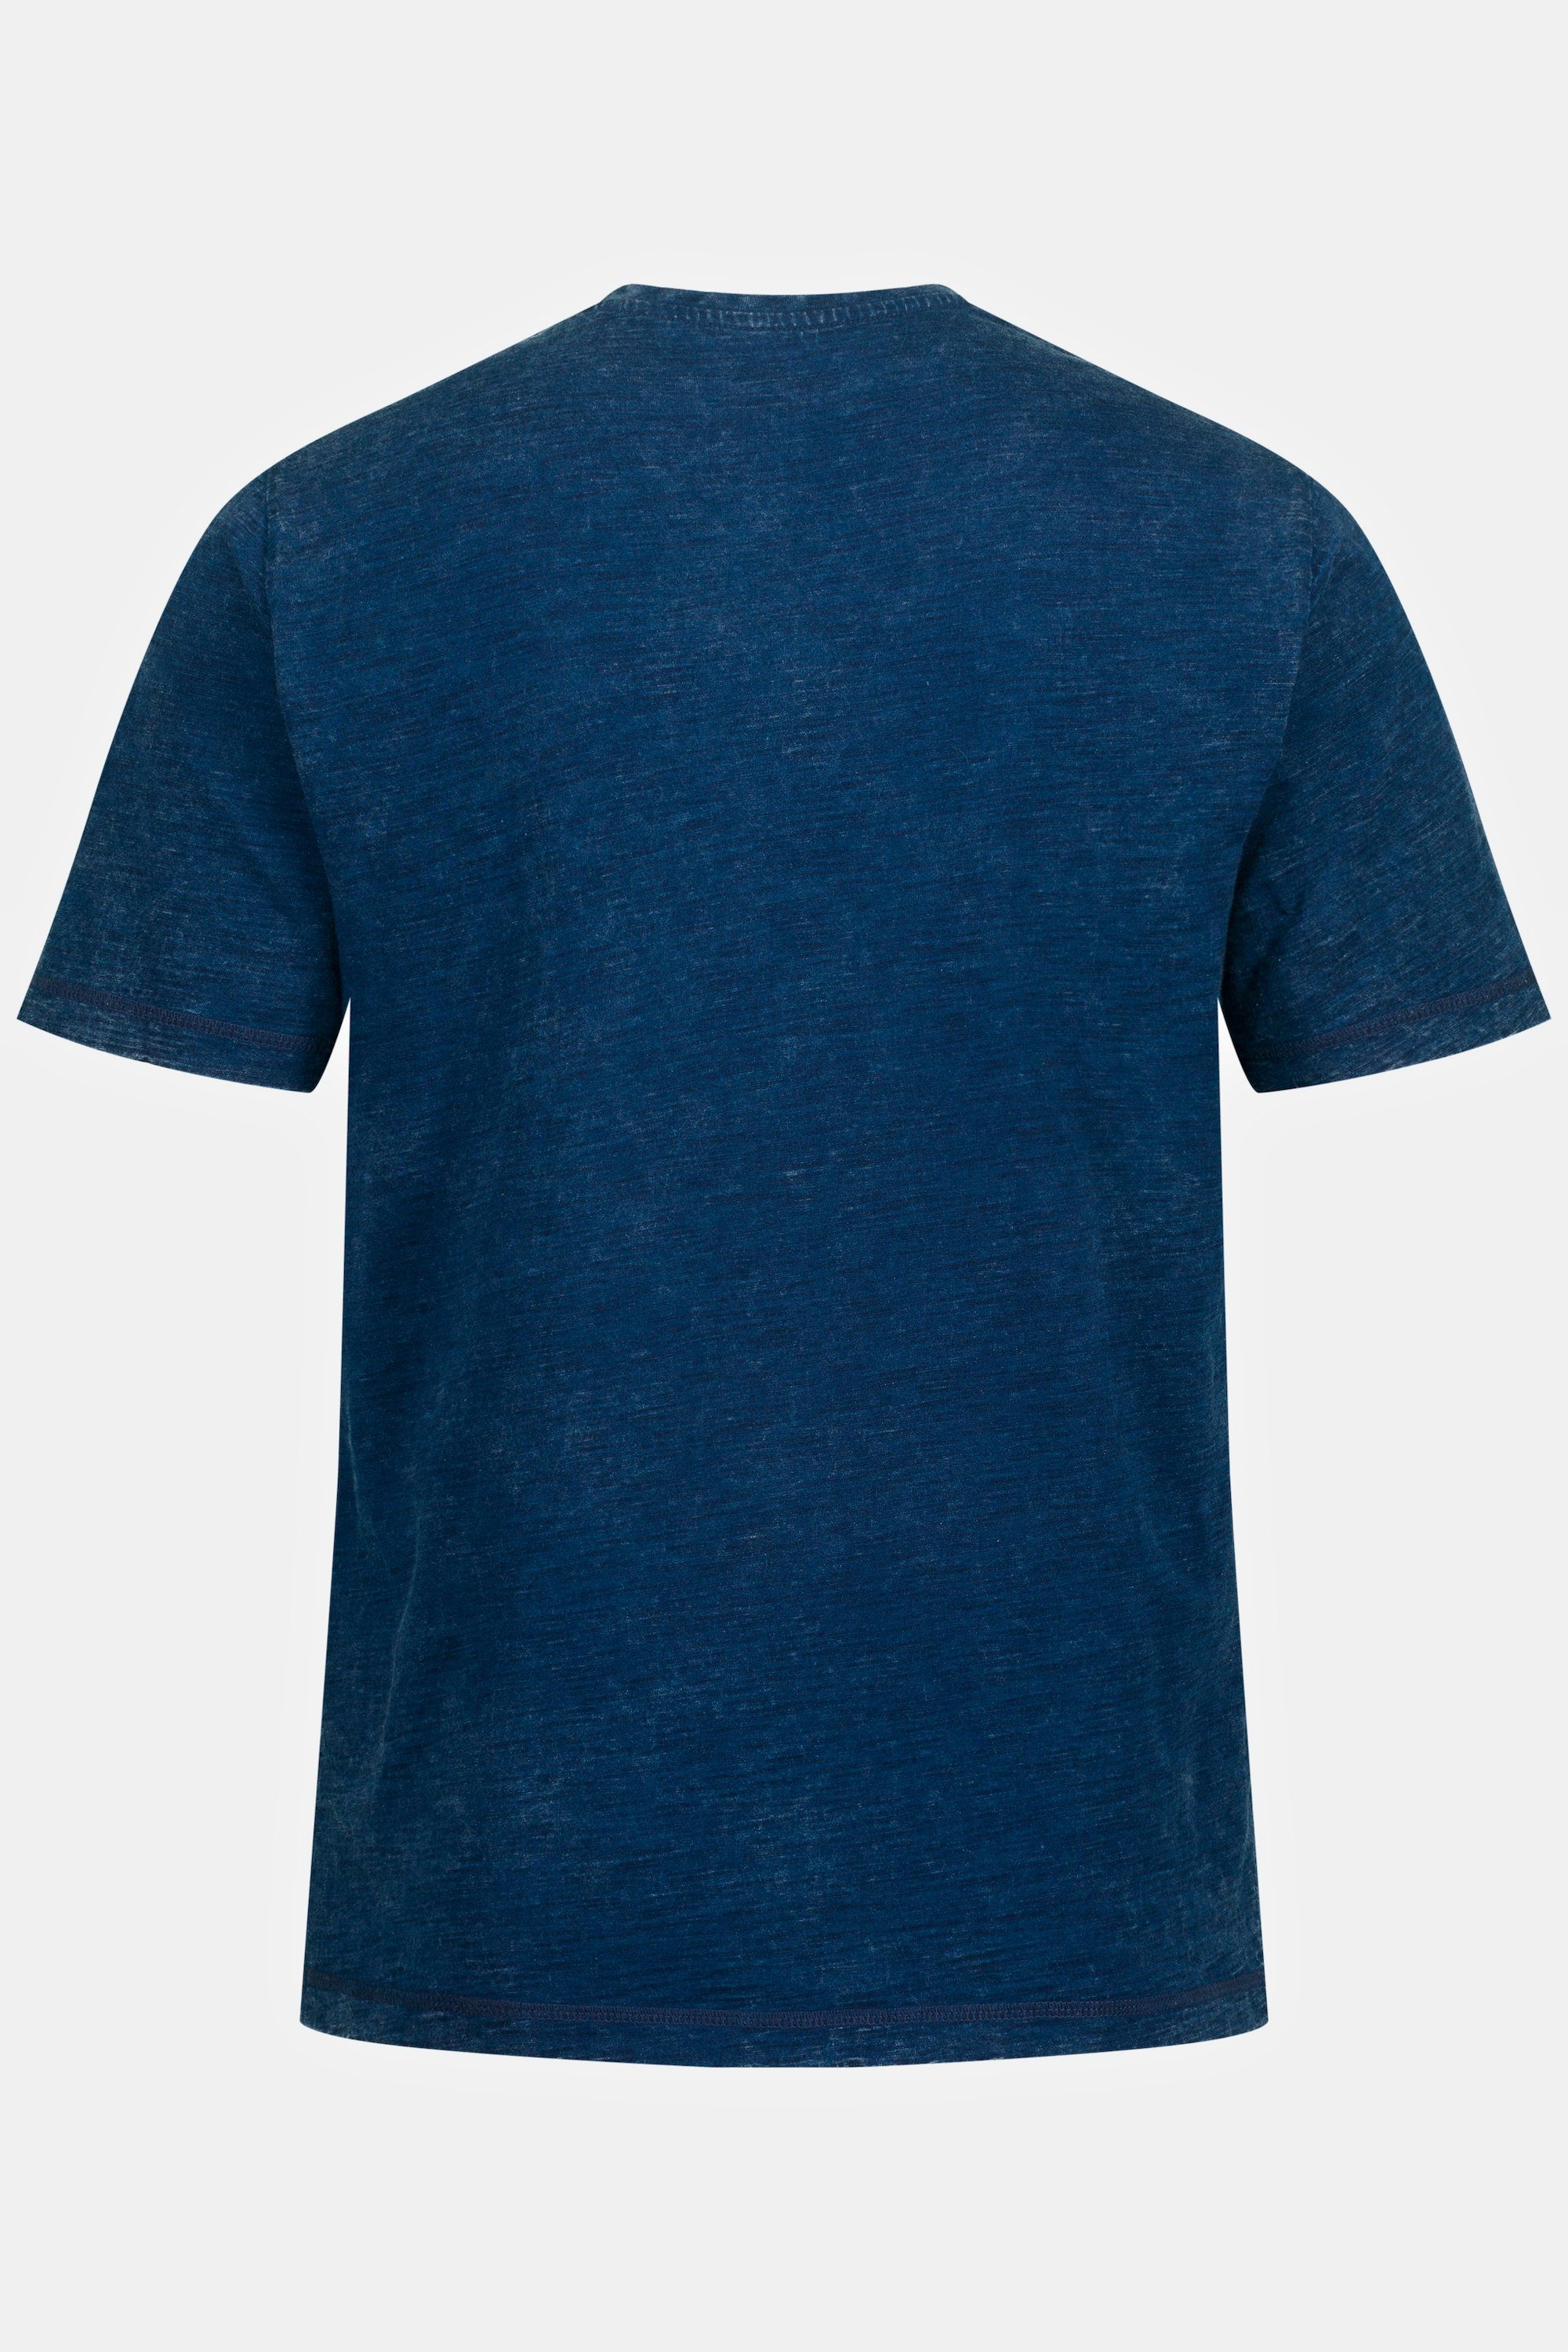 Halbarm T-Shirt Print JP1880 T-Shirt Indigo-Färbung Rundhals